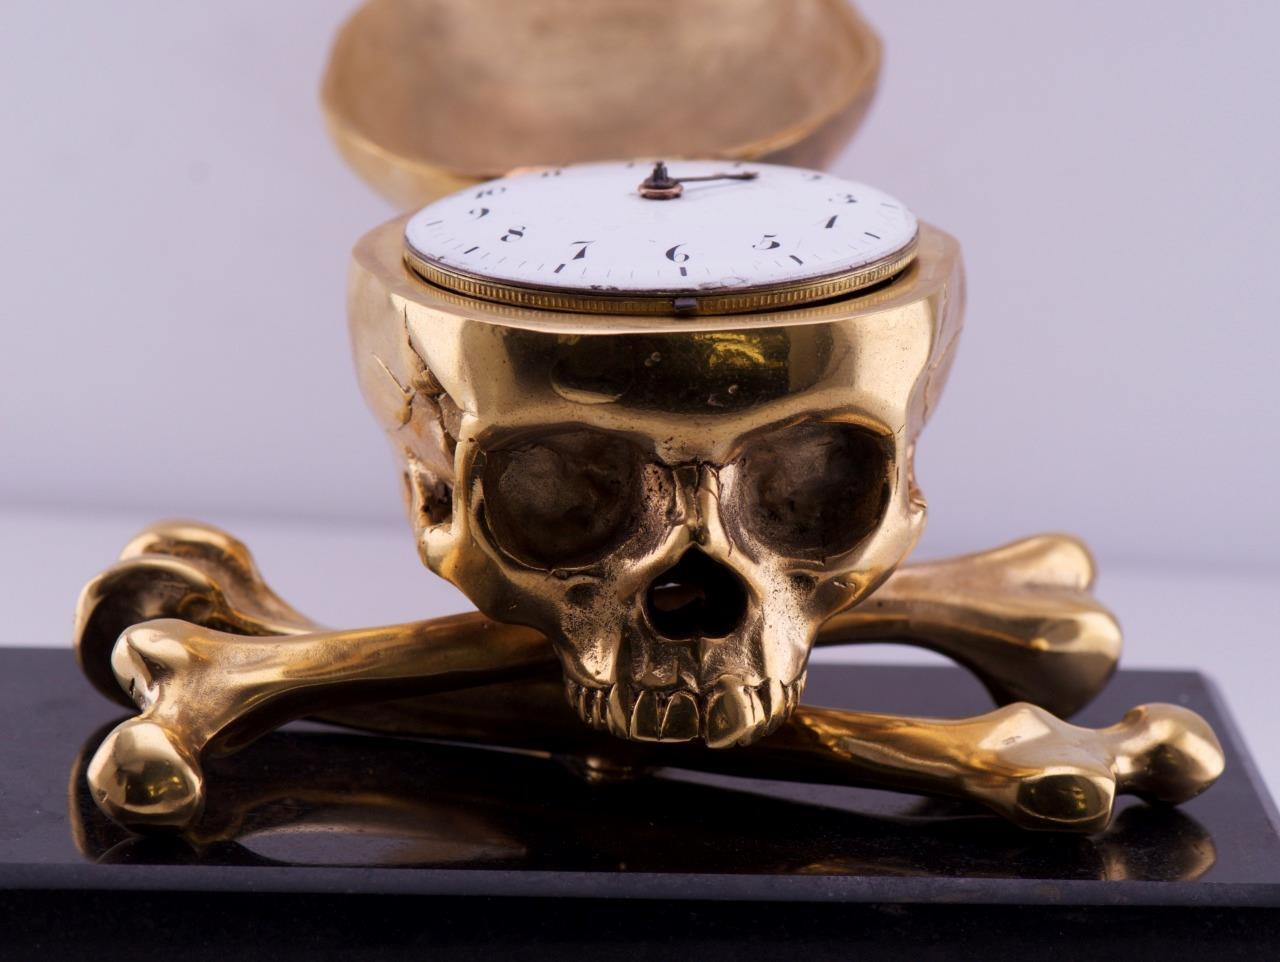 Antique Desk Table Clock French Verge Fusee-Gilt Bronze Skull Sculpture c1800's